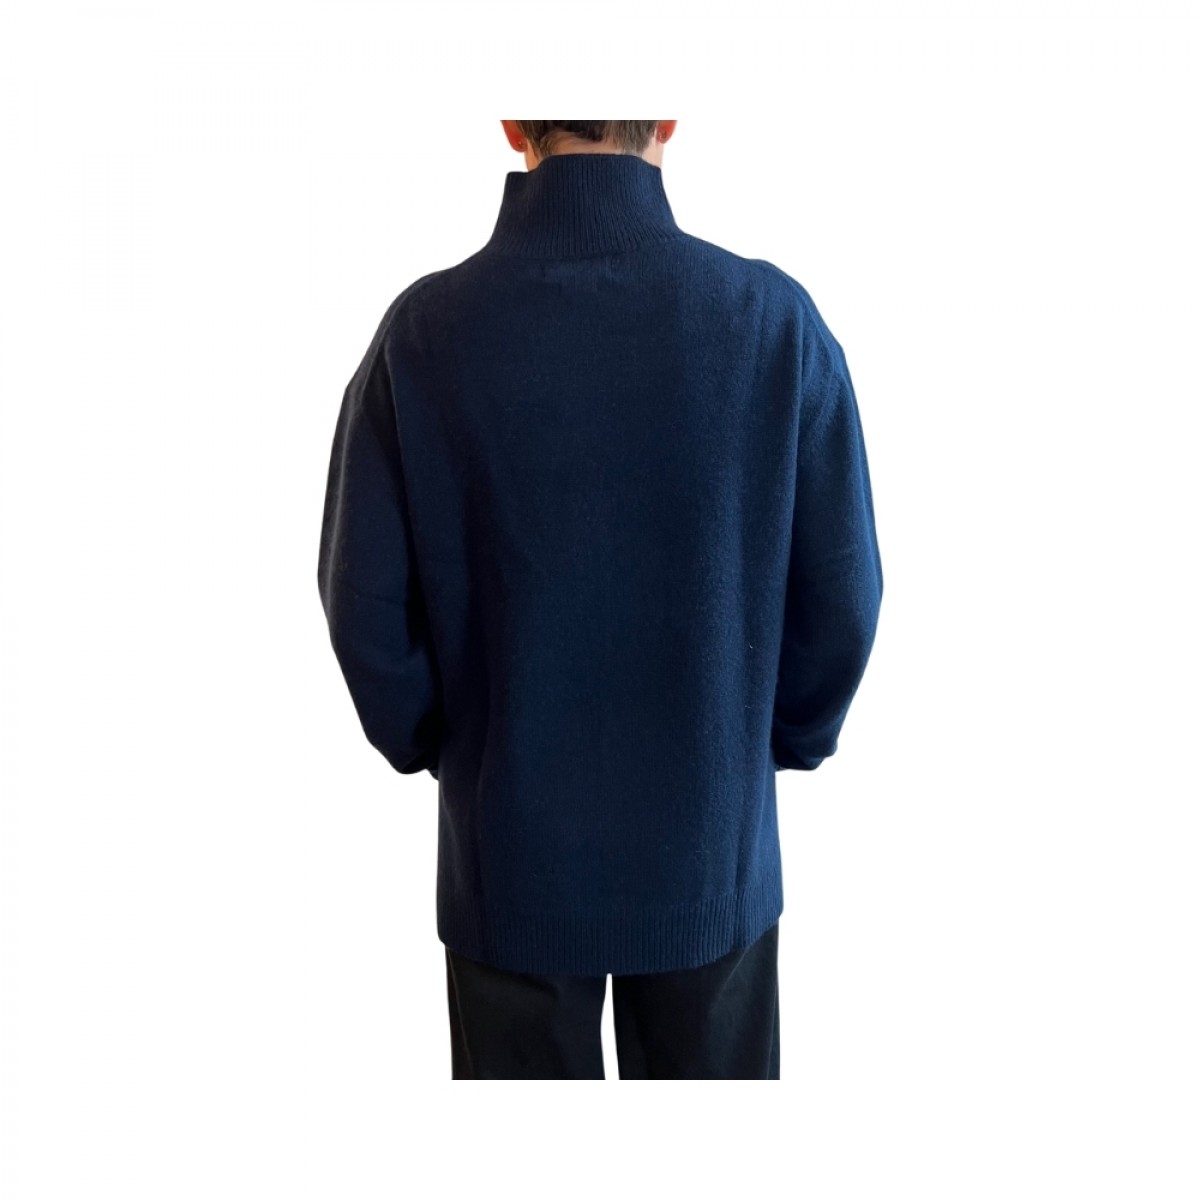 kuma knit - blue - ryg